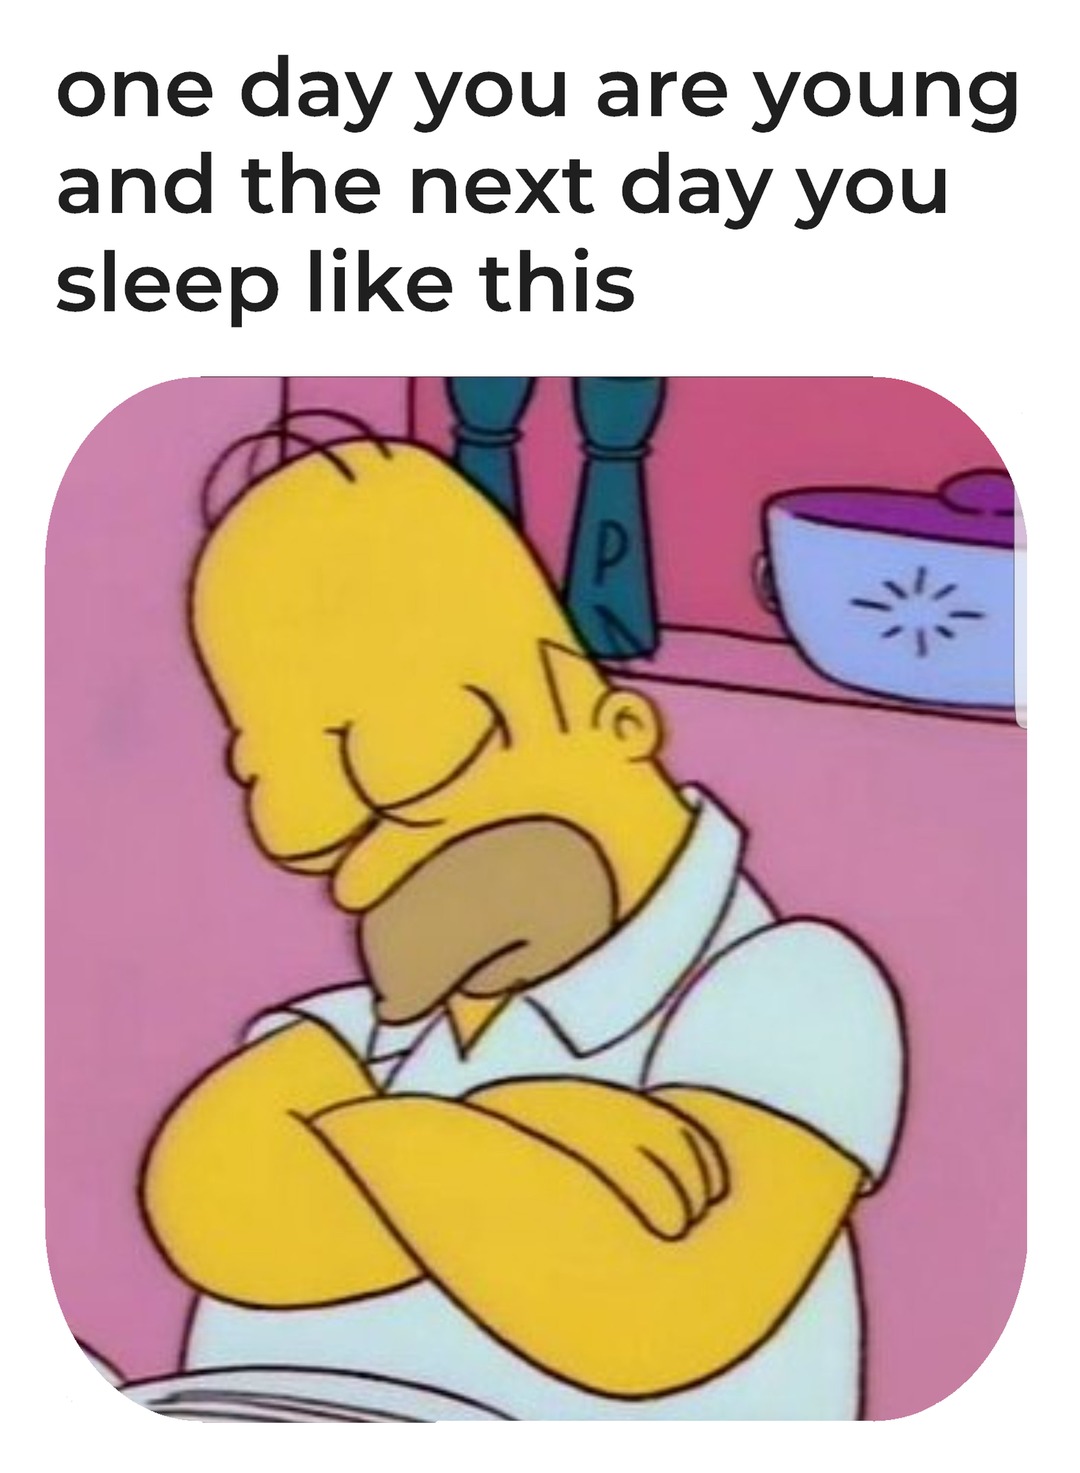 The next day you sleep like this - meme